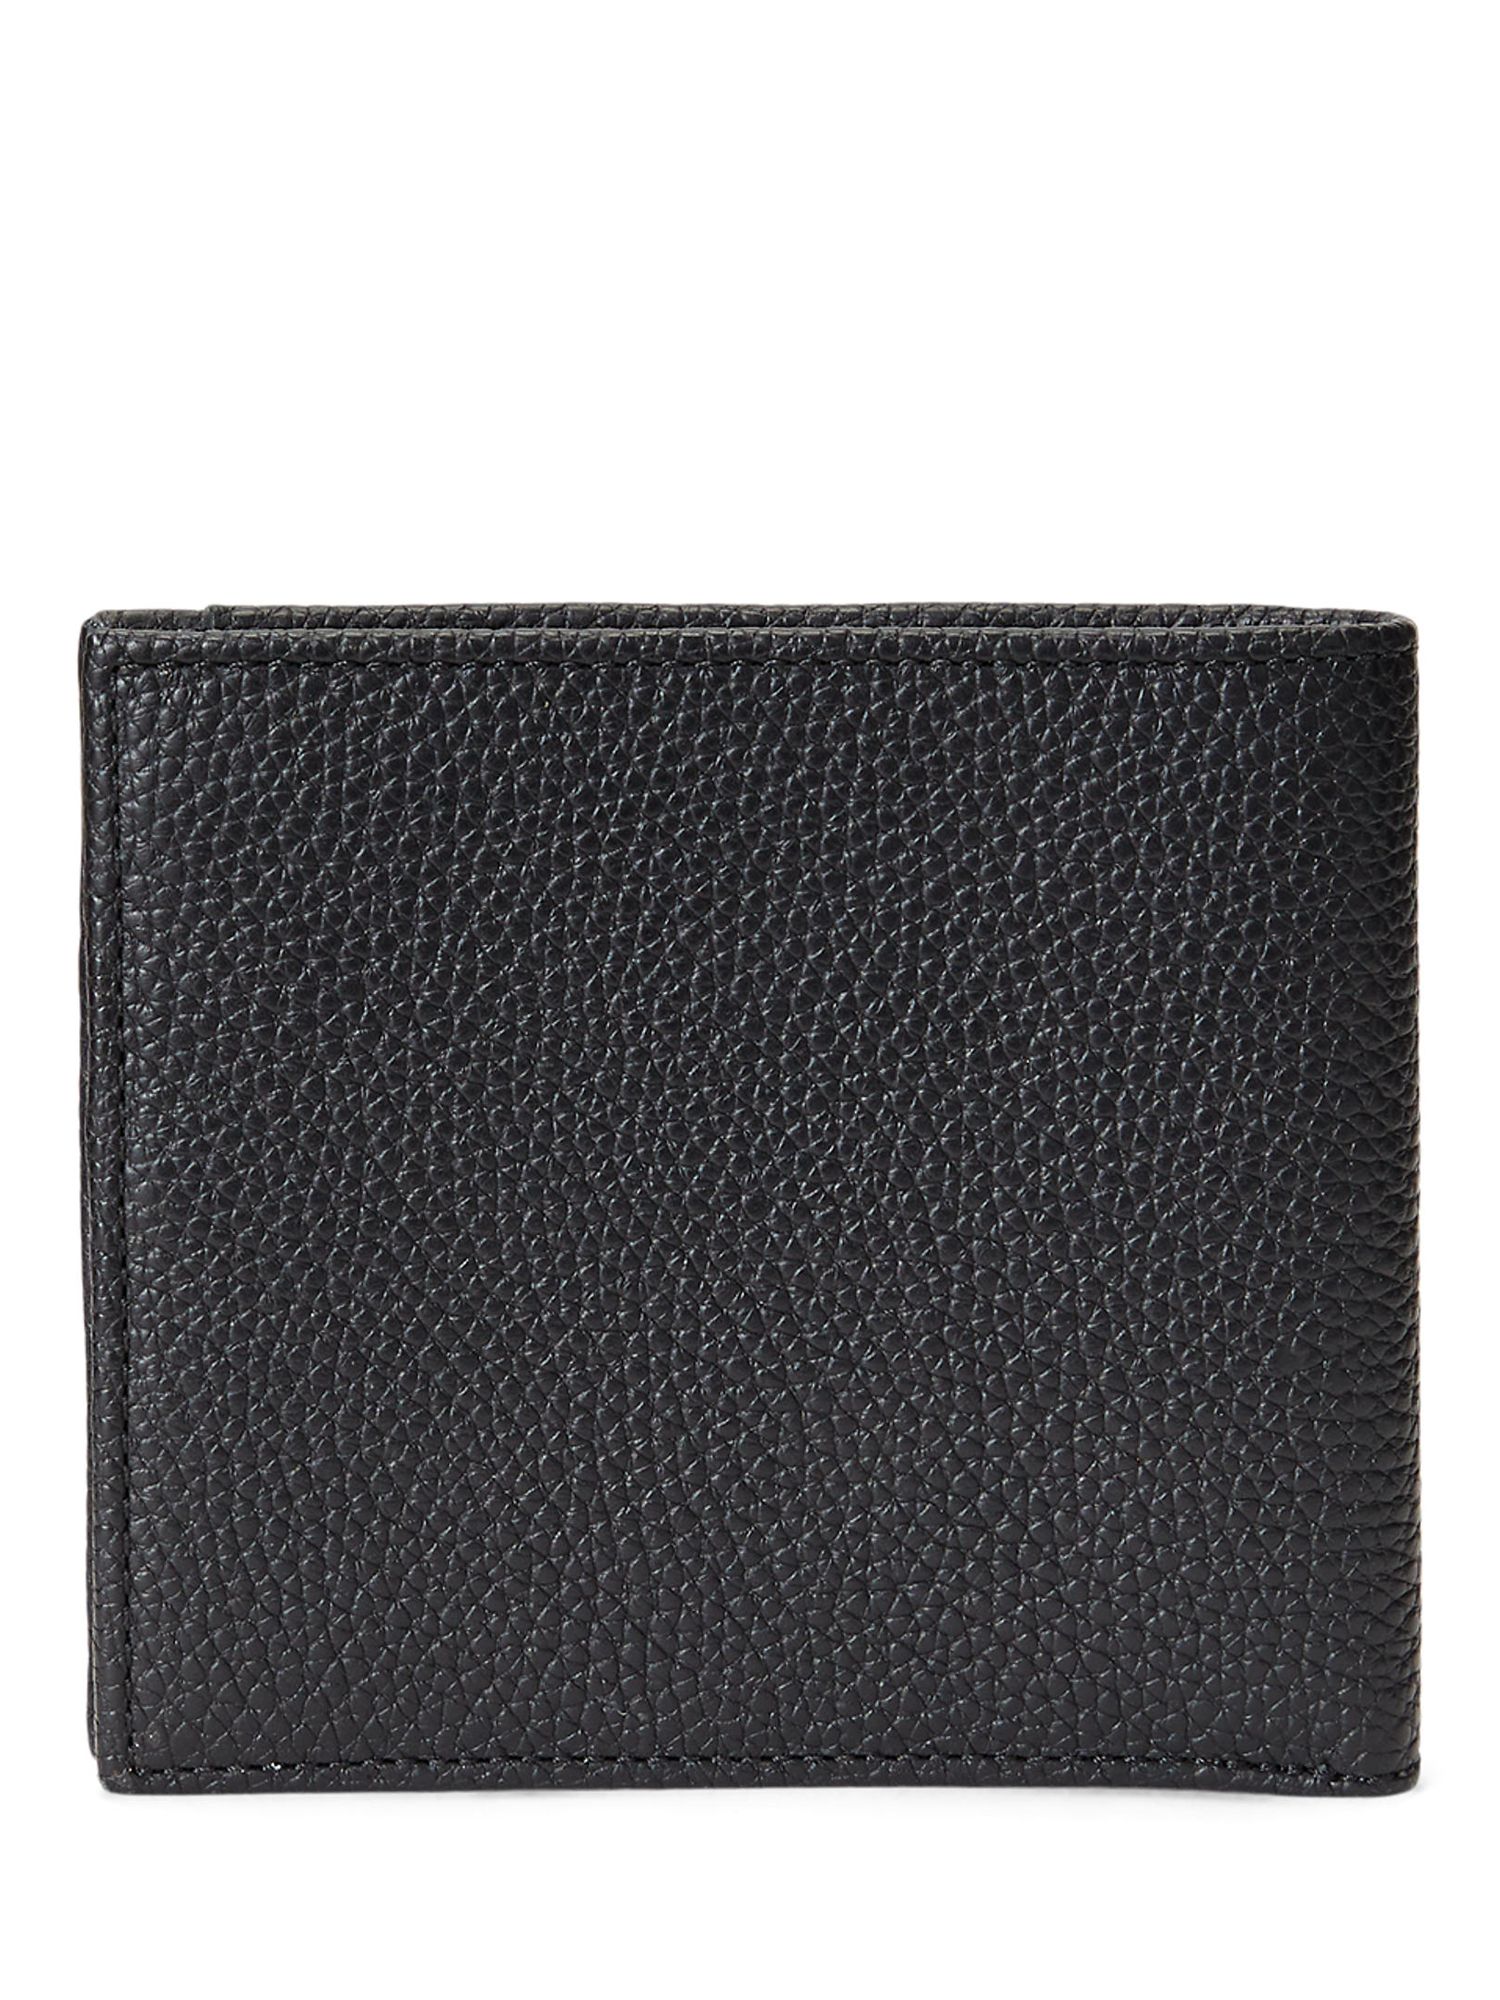 Polo Ralph Lauren Pebbled Leather Wallet, Black at John Lewis & Partners